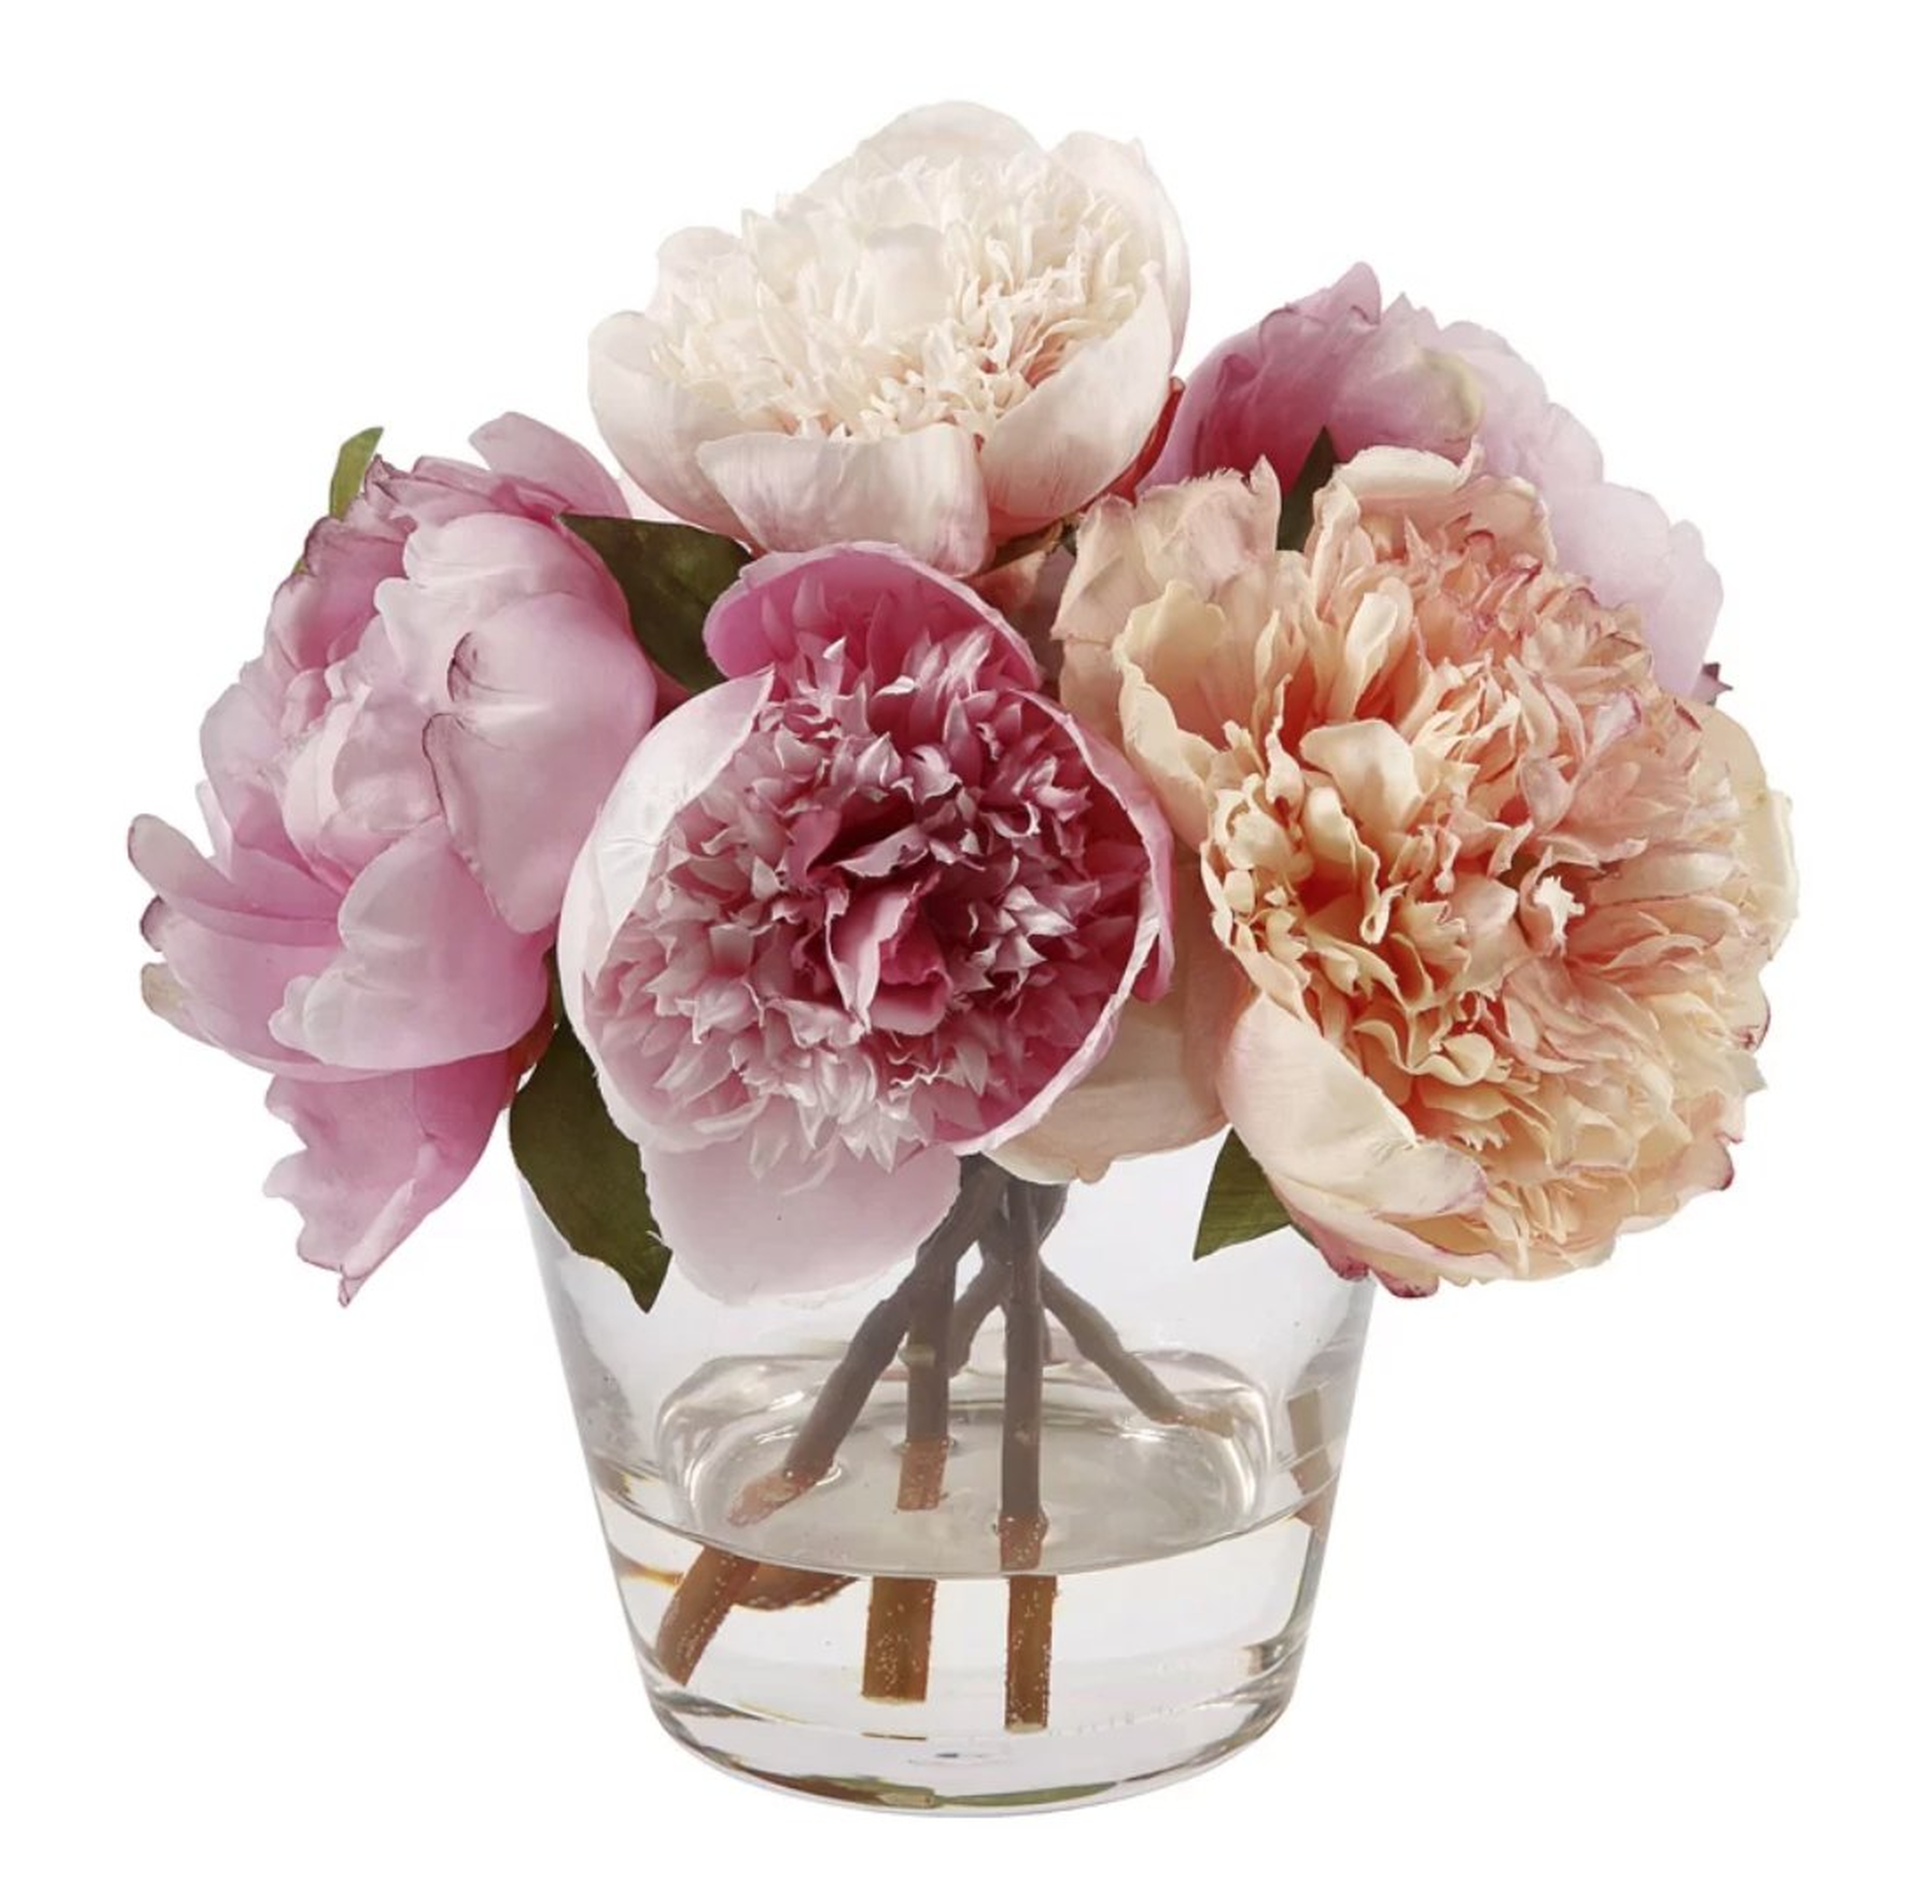 Peonies Floral Arrangement in Glass Vase - Birch Lane